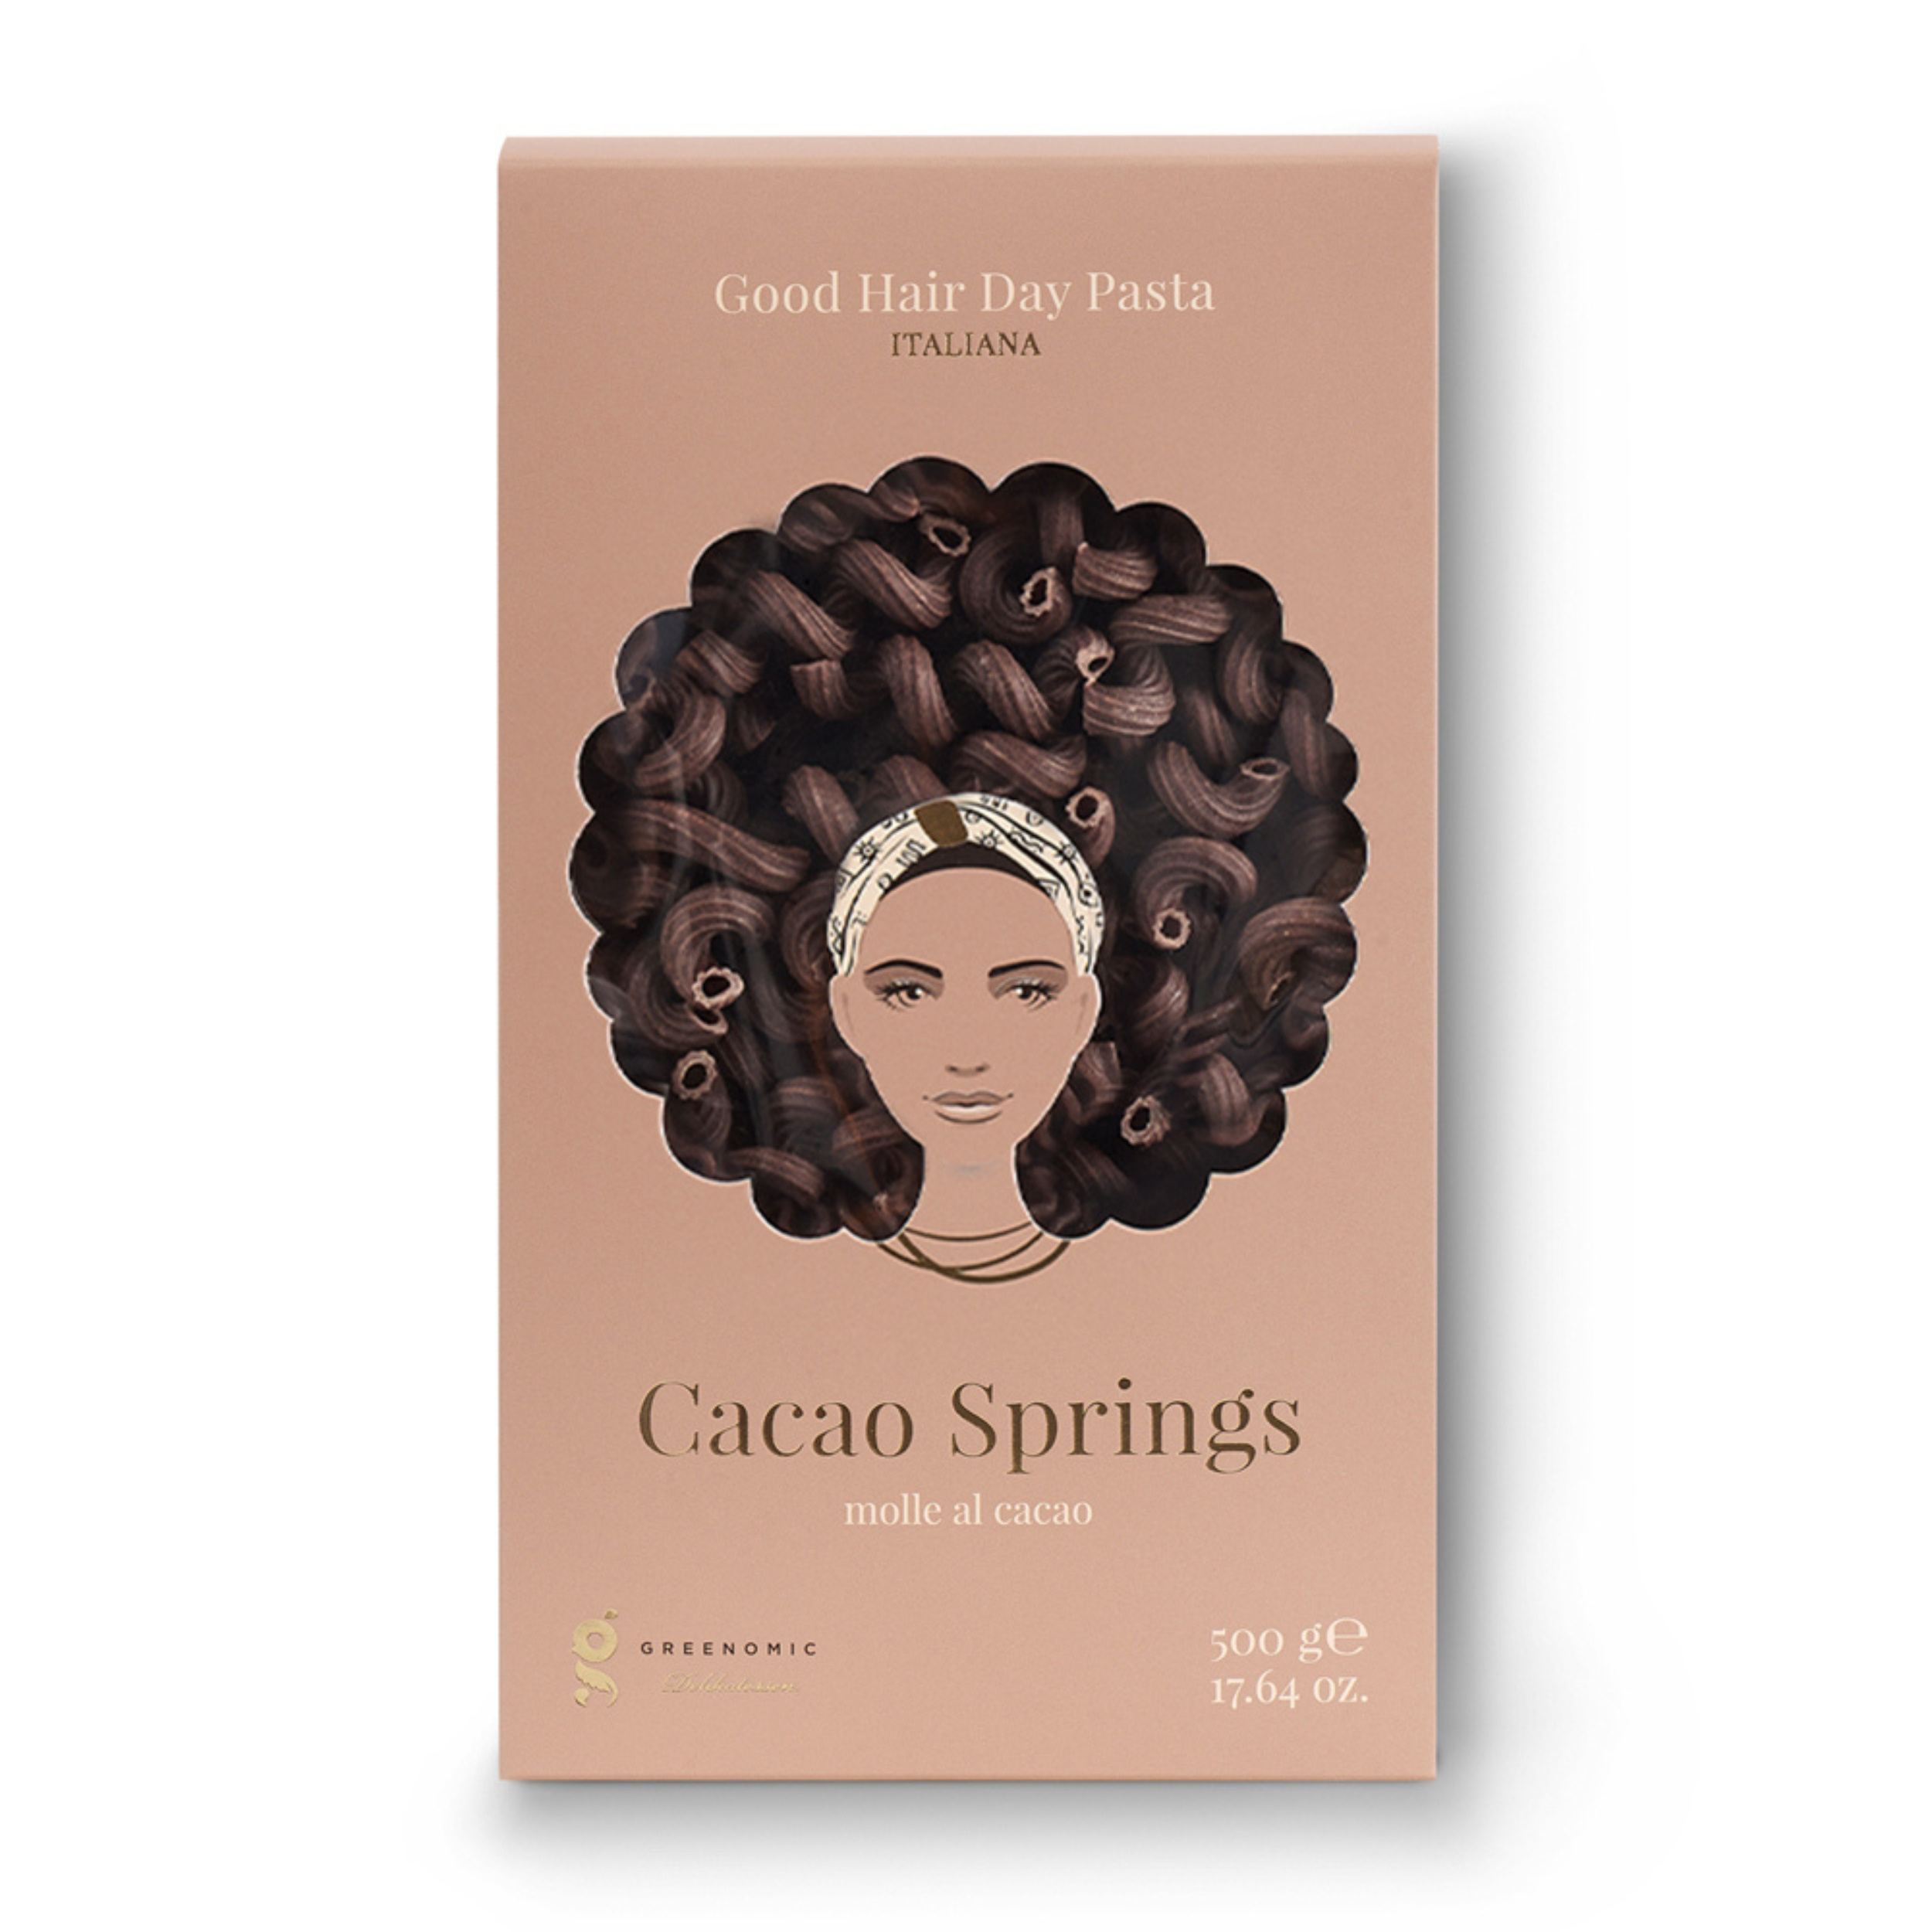 Greenomic - Good Hair Day Pasta - Cacao Springs 500g